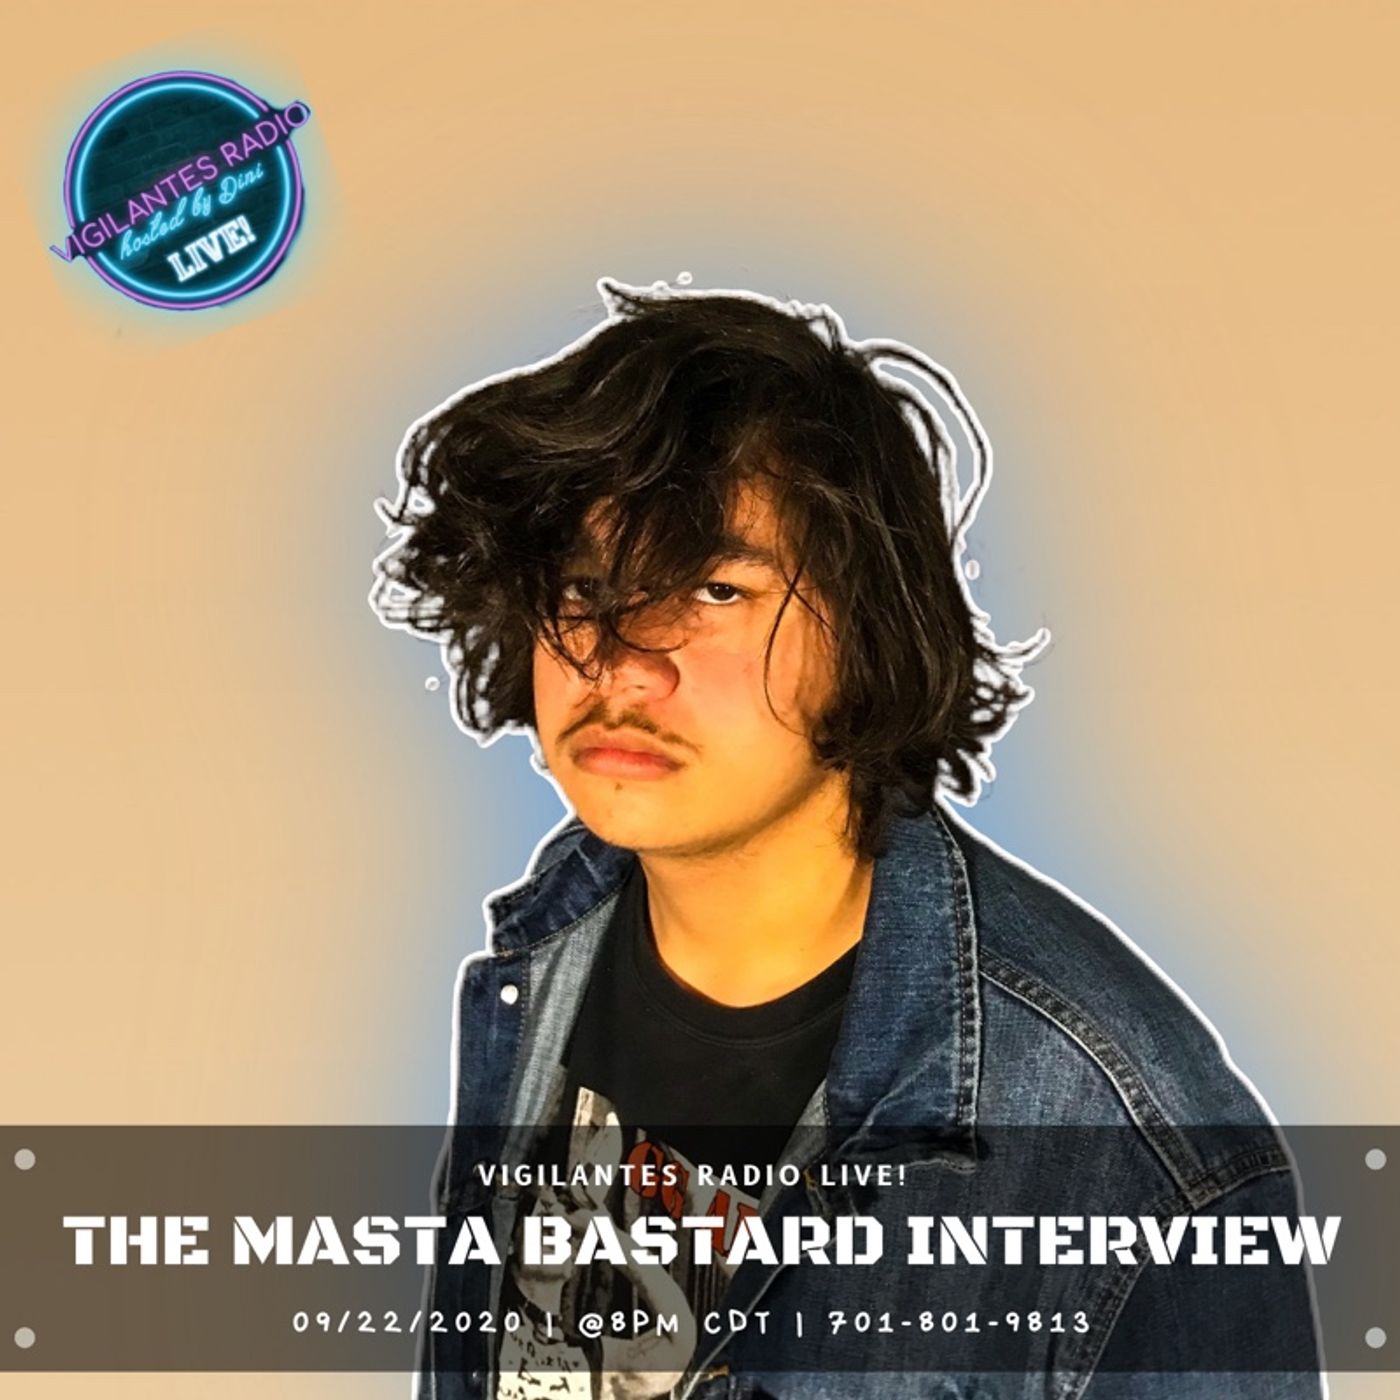 The Masta Bastard Interview. Image